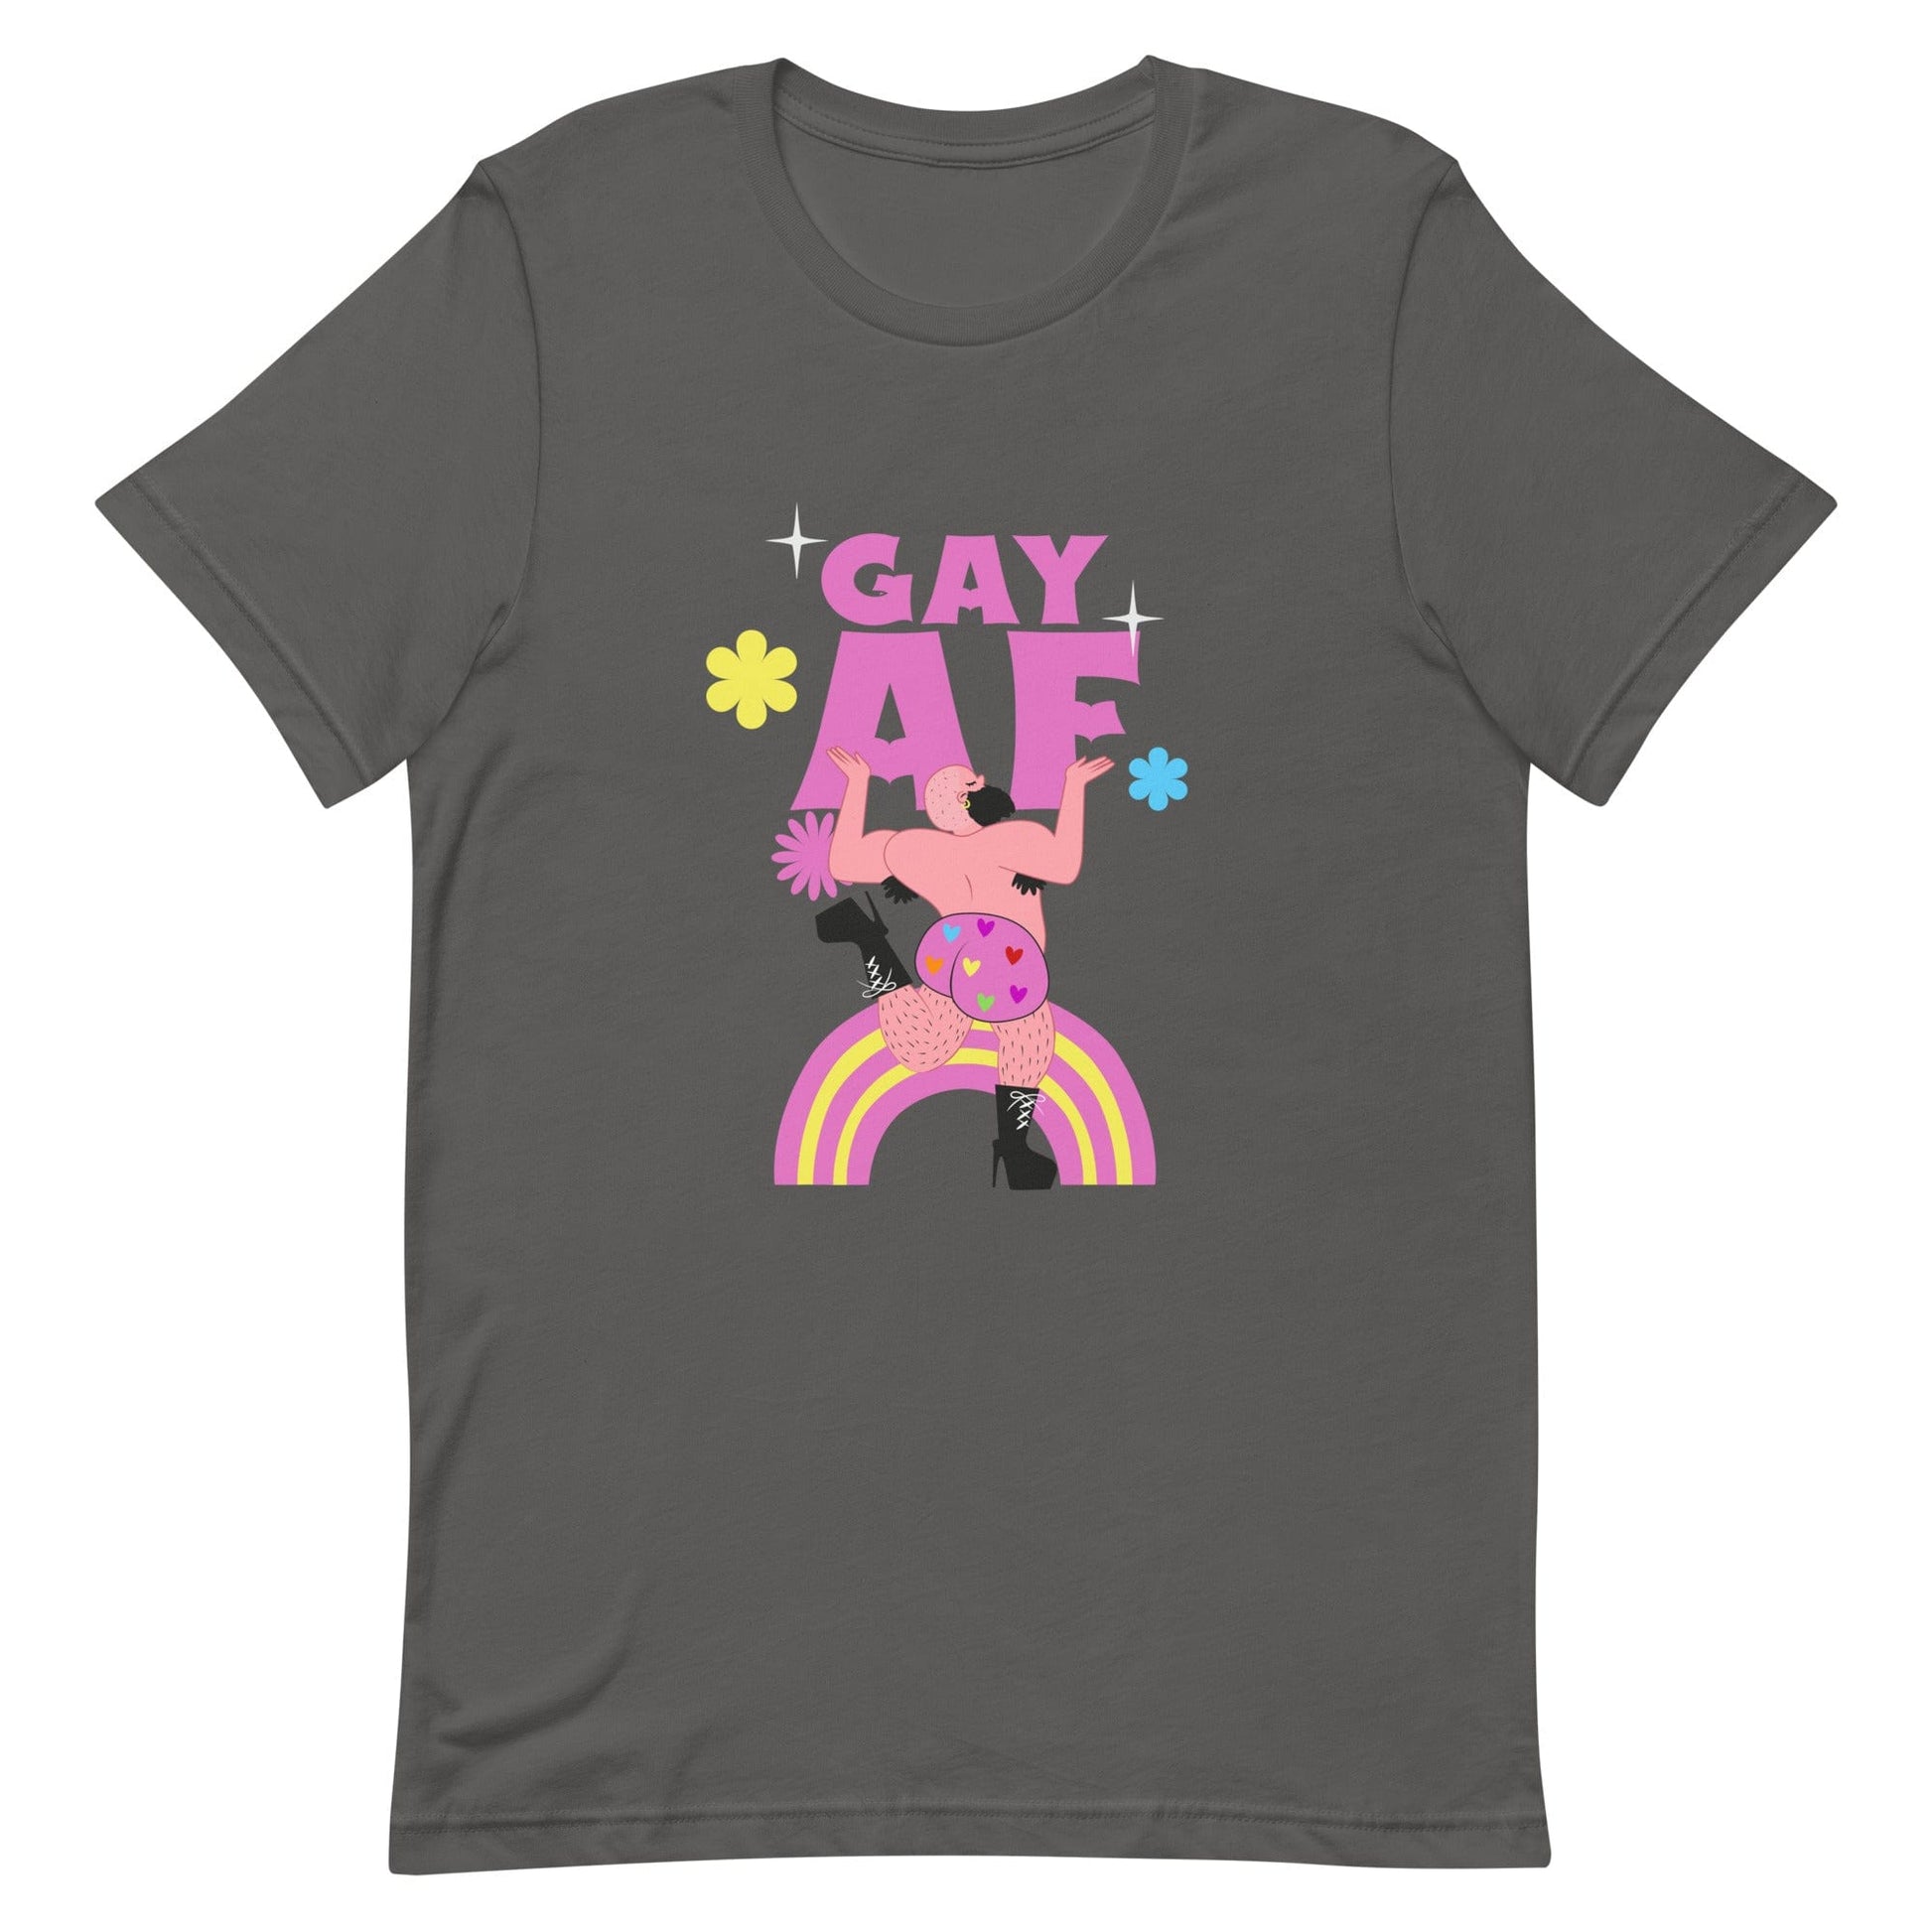 queer-gay-af-asphalt-t-shirt-lgbtq-by-feminist-define